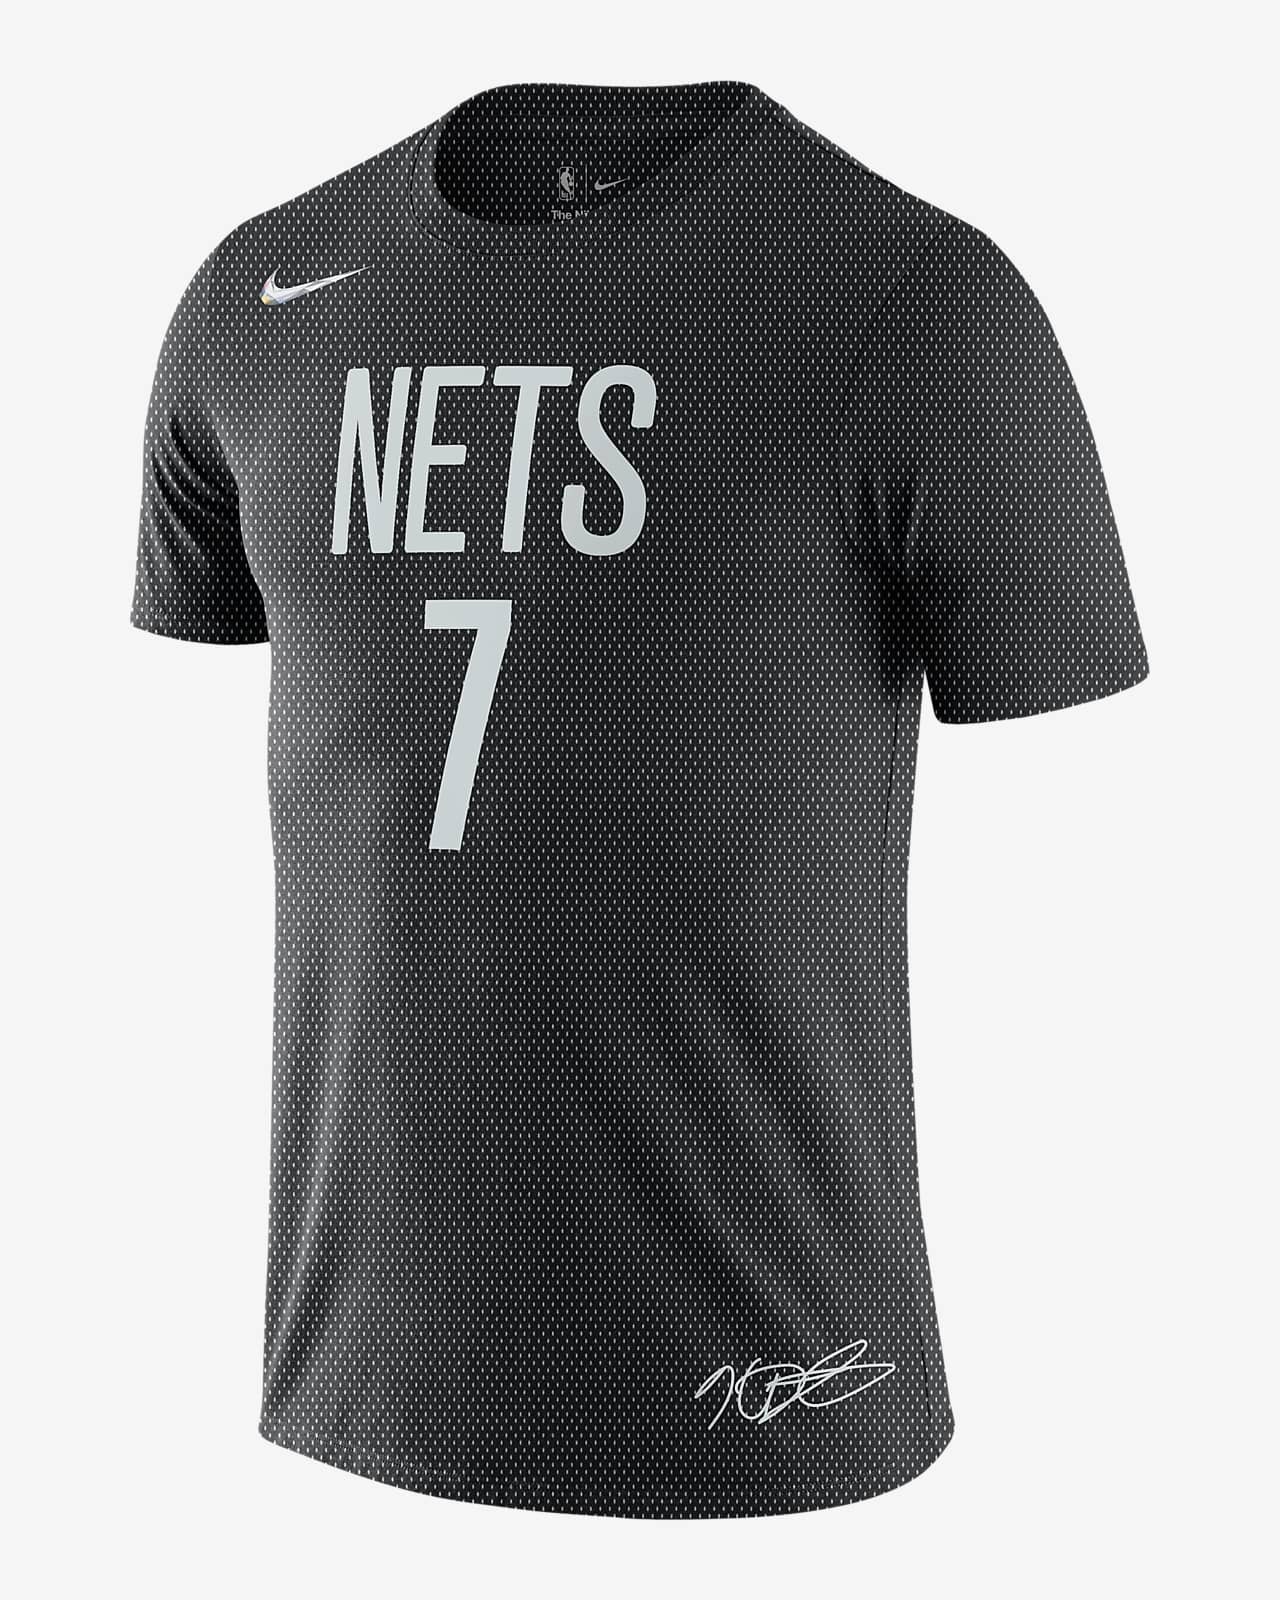 Playera para hombre Nike NBA Kevin Durant Nets